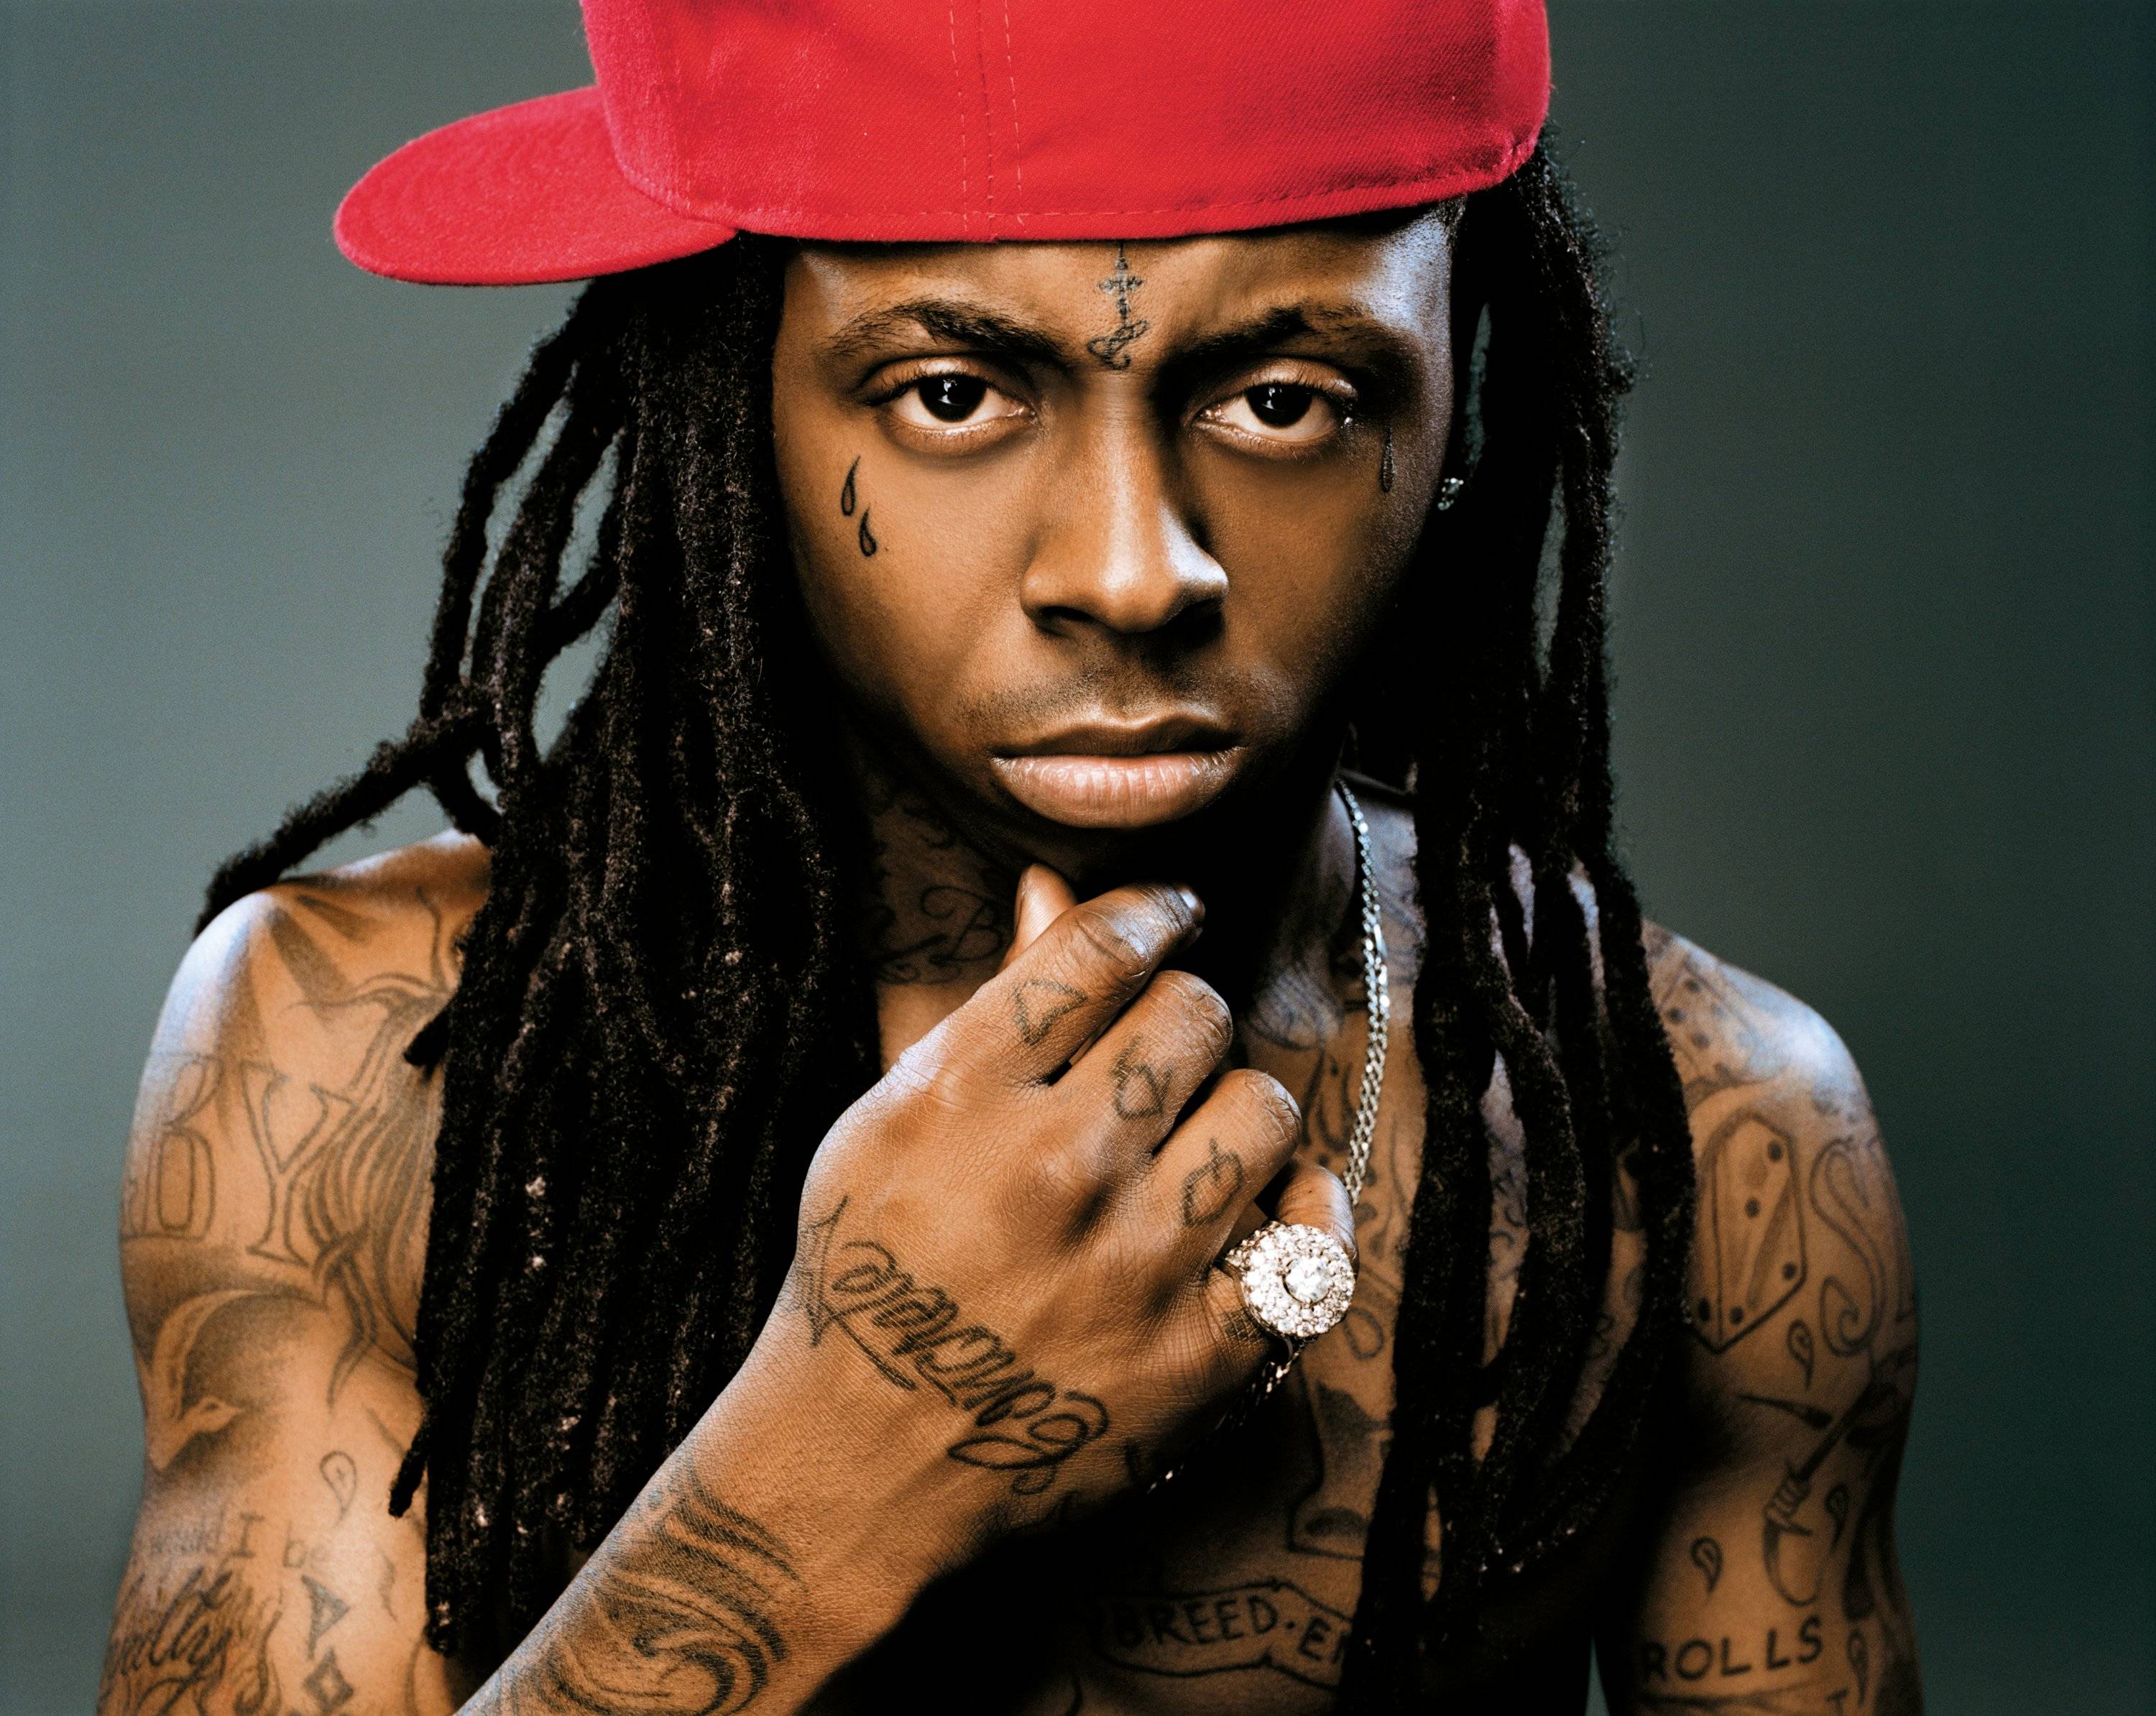 Lil Wayne Wallpaper. High Definition Wallpaper, High Definition